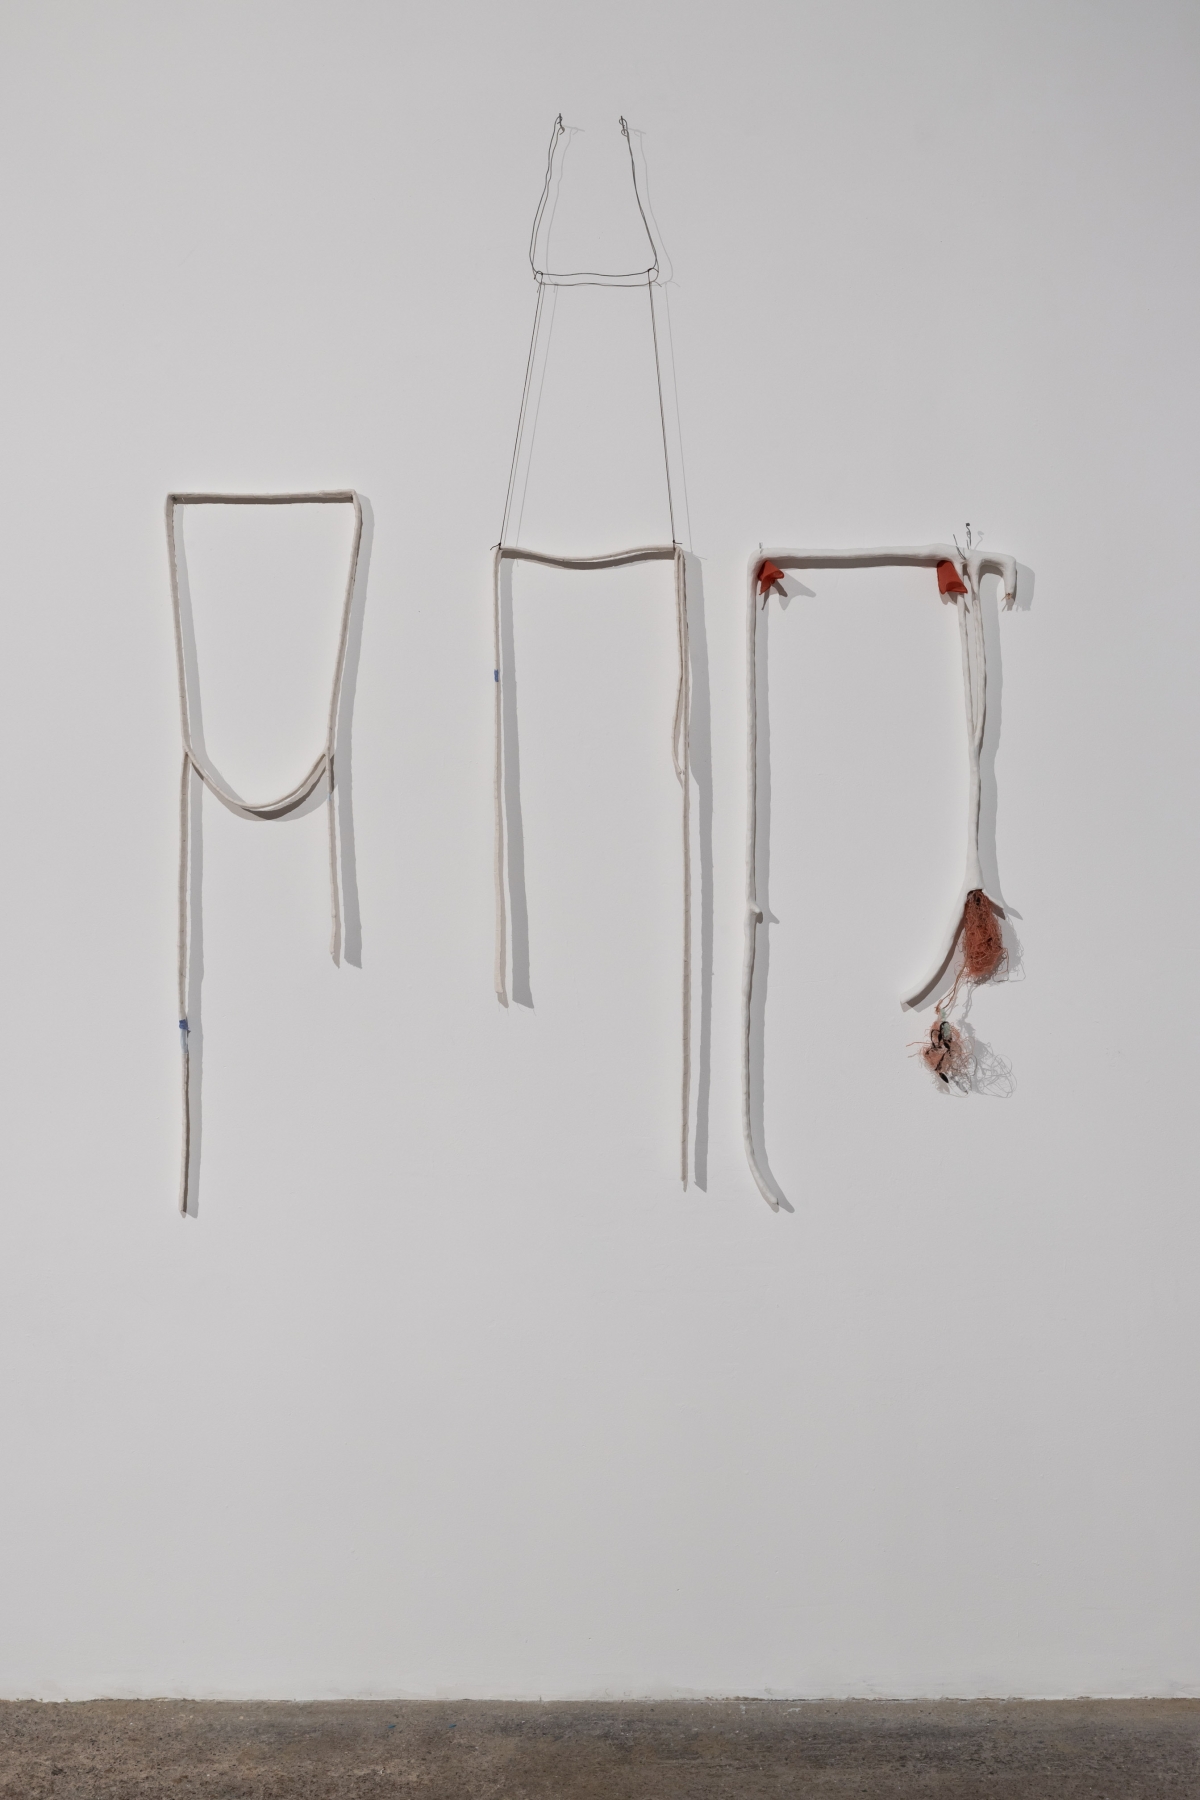 Aleana Egan&nbsp;
returns, 2020/21
fabric, card, plaster, papier-m&acirc;che, wire, rope, seaweed
146 x 160 x 5 cm / 57.5 x 63 x 2 in&nbsp;&nbsp;

Installation view: Feeling of Knowing,&nbsp;2021, The Complex, Dublin